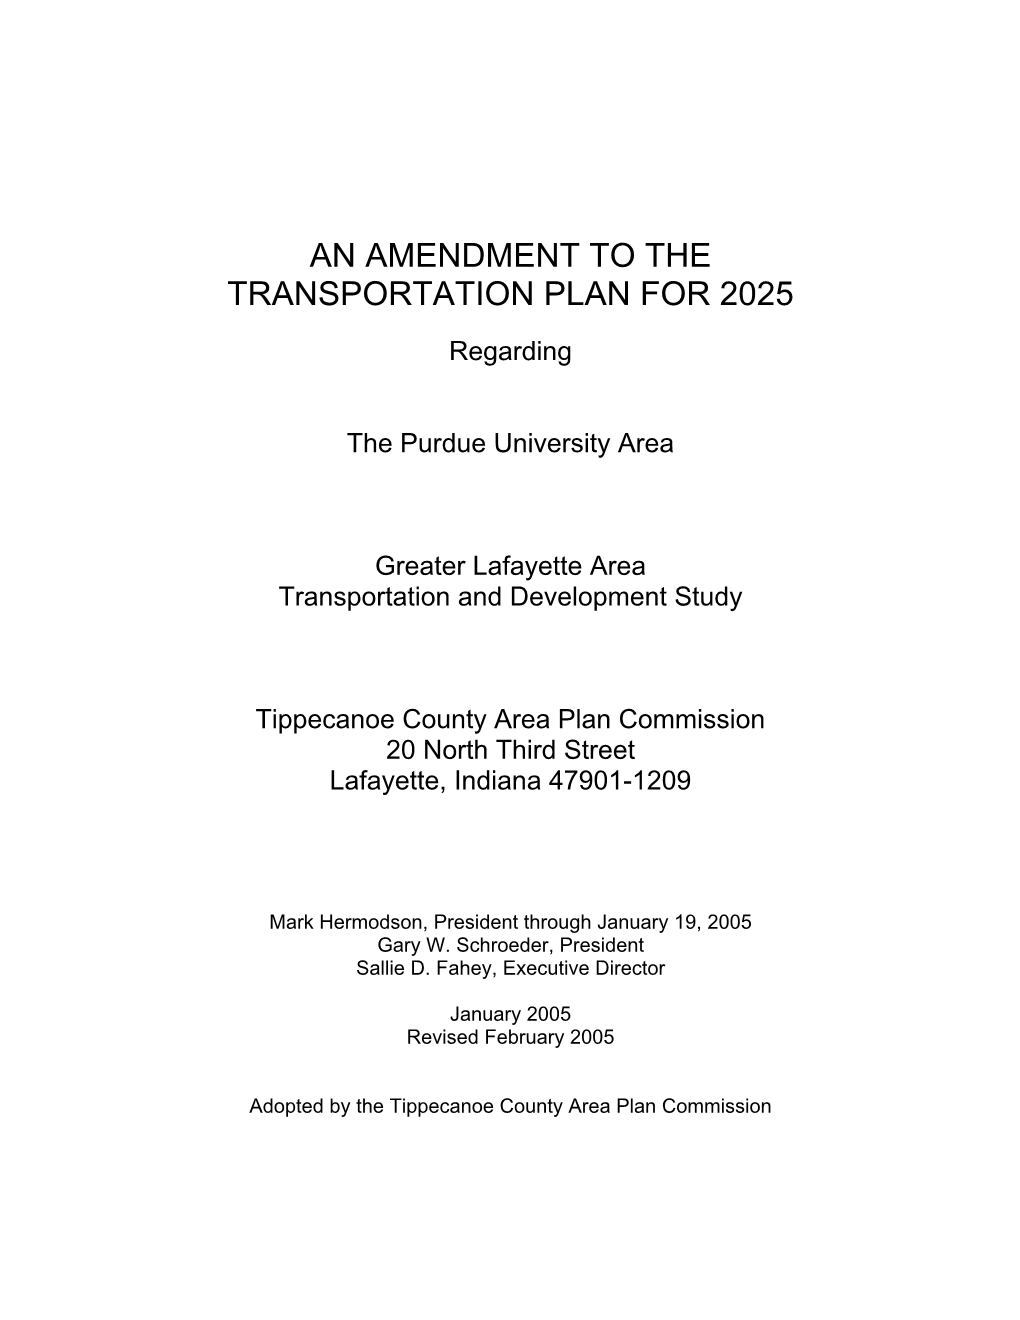 The Purdue Plan an Amendment to the 2025 Transportation Plan